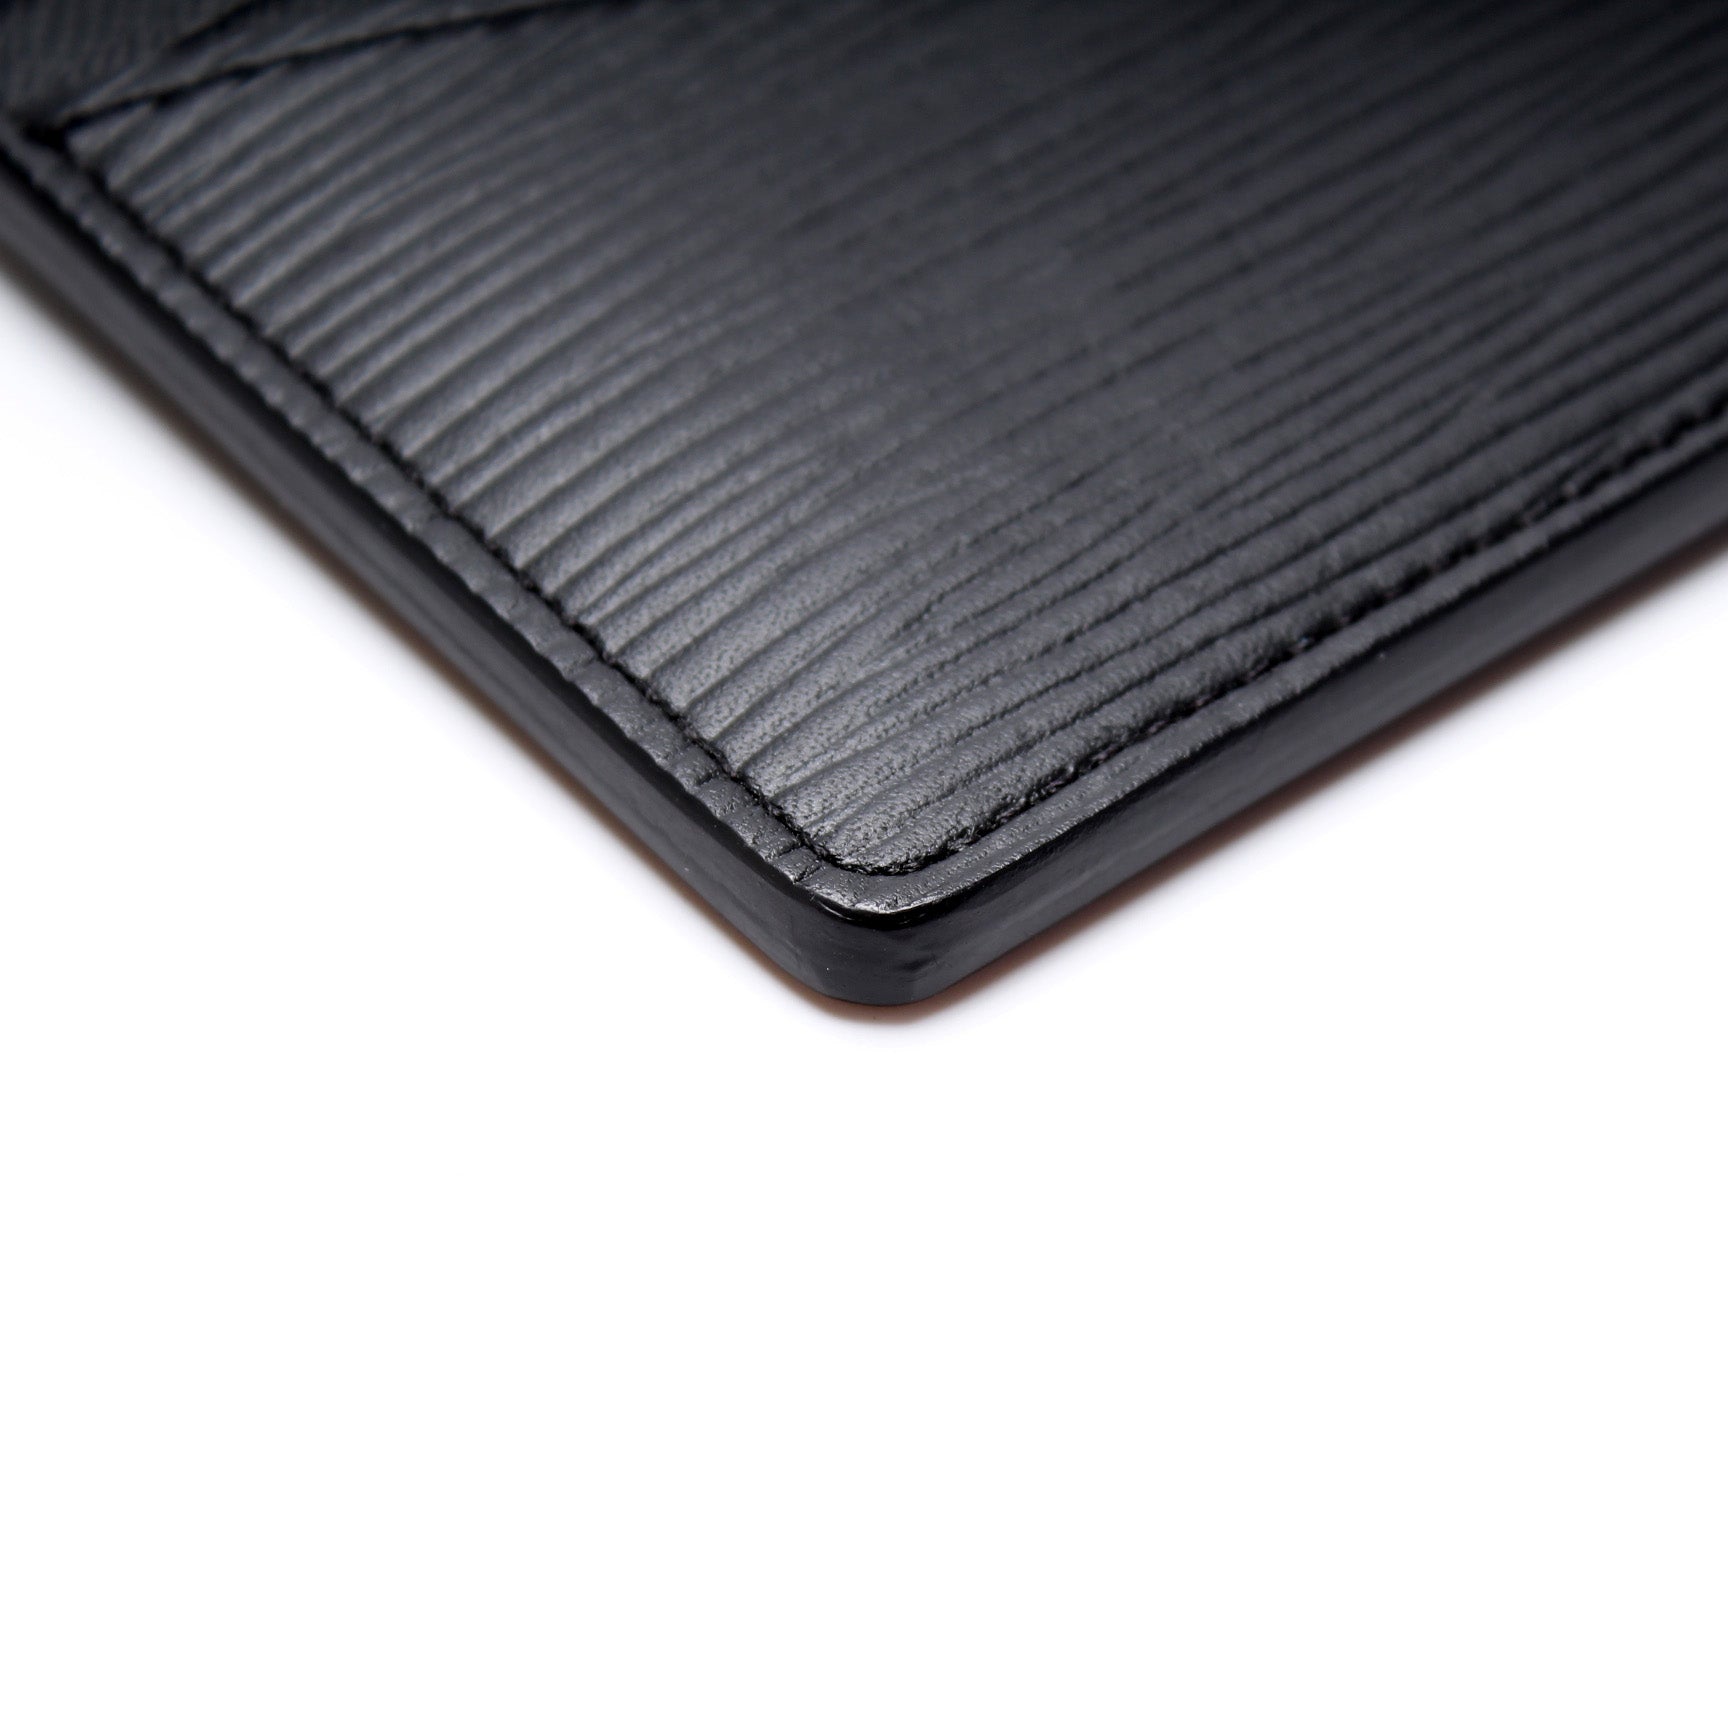 Louis Vuitton Black Epi Leather Neo Porte Cartes Card Holder